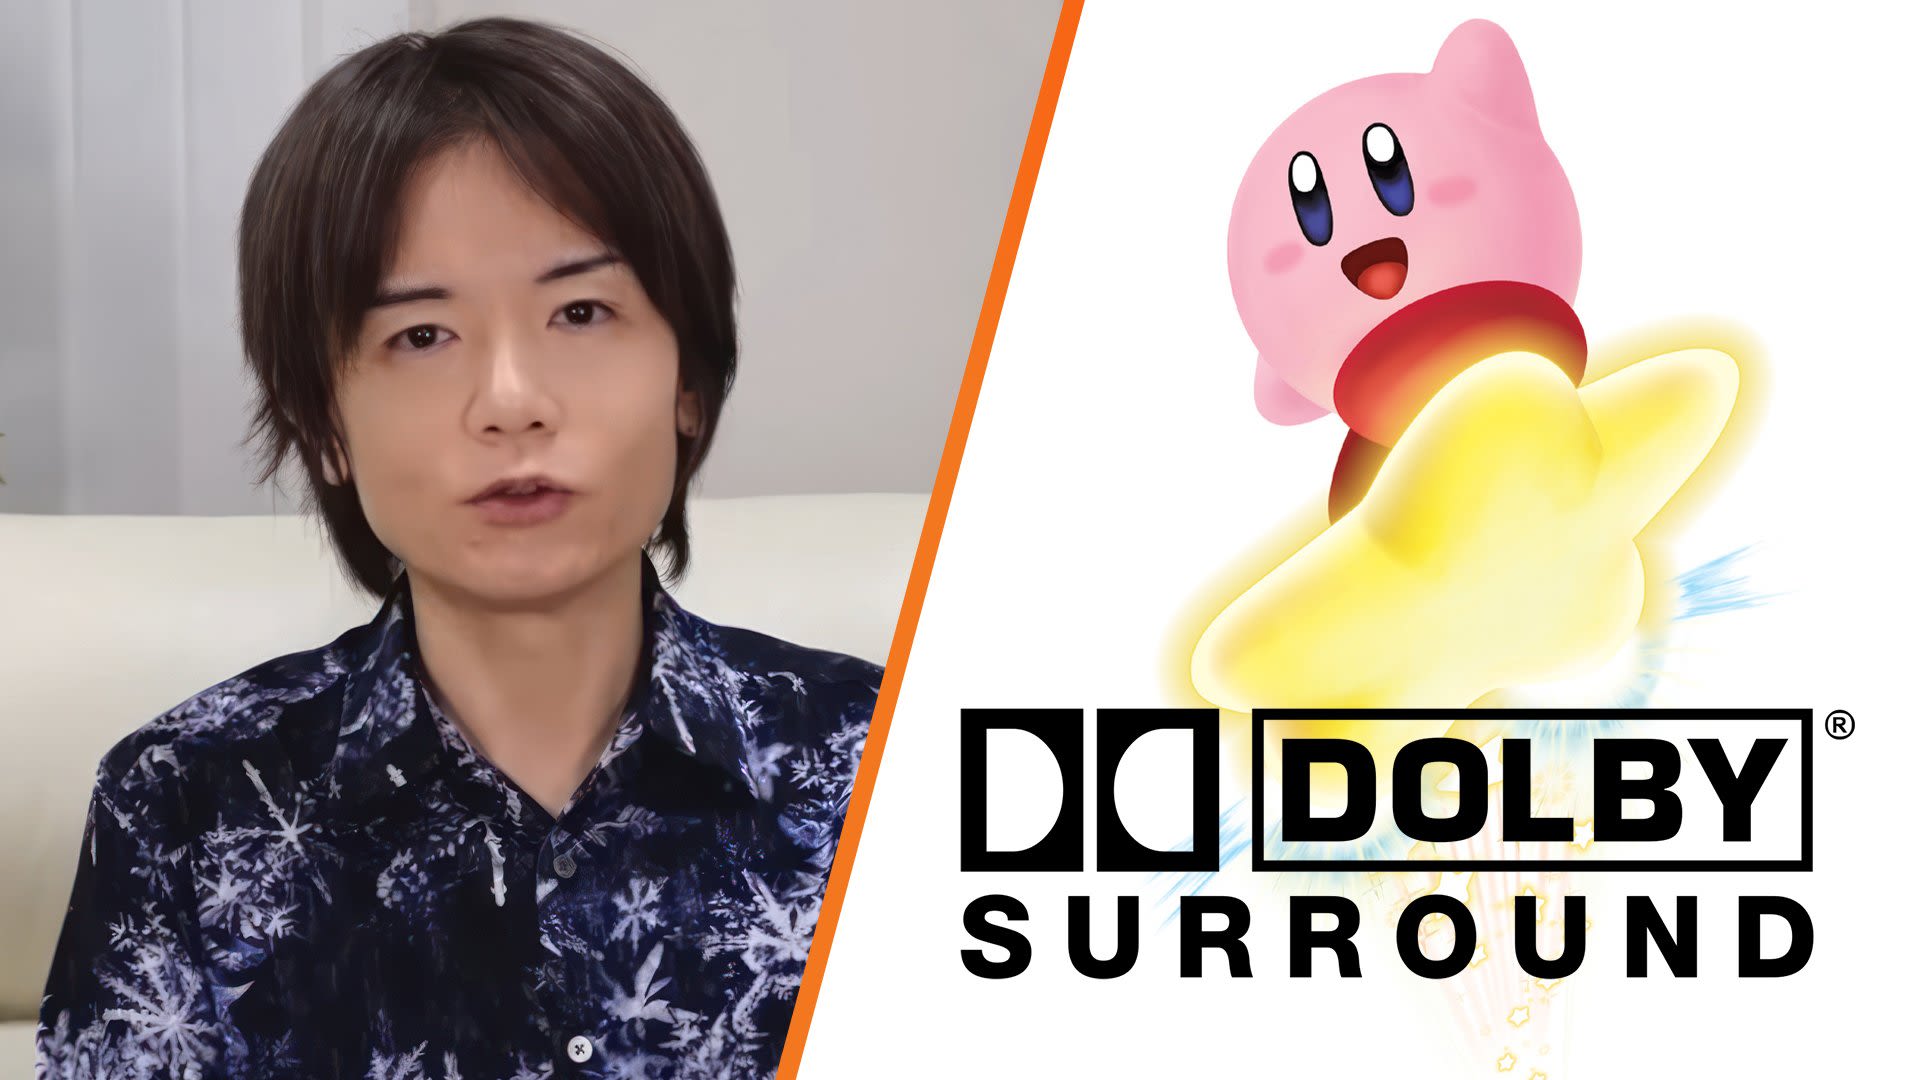 Masahiro Sakurai refused to add Dolby Surround to a Kirby game because players had to sit through the logo | VGC